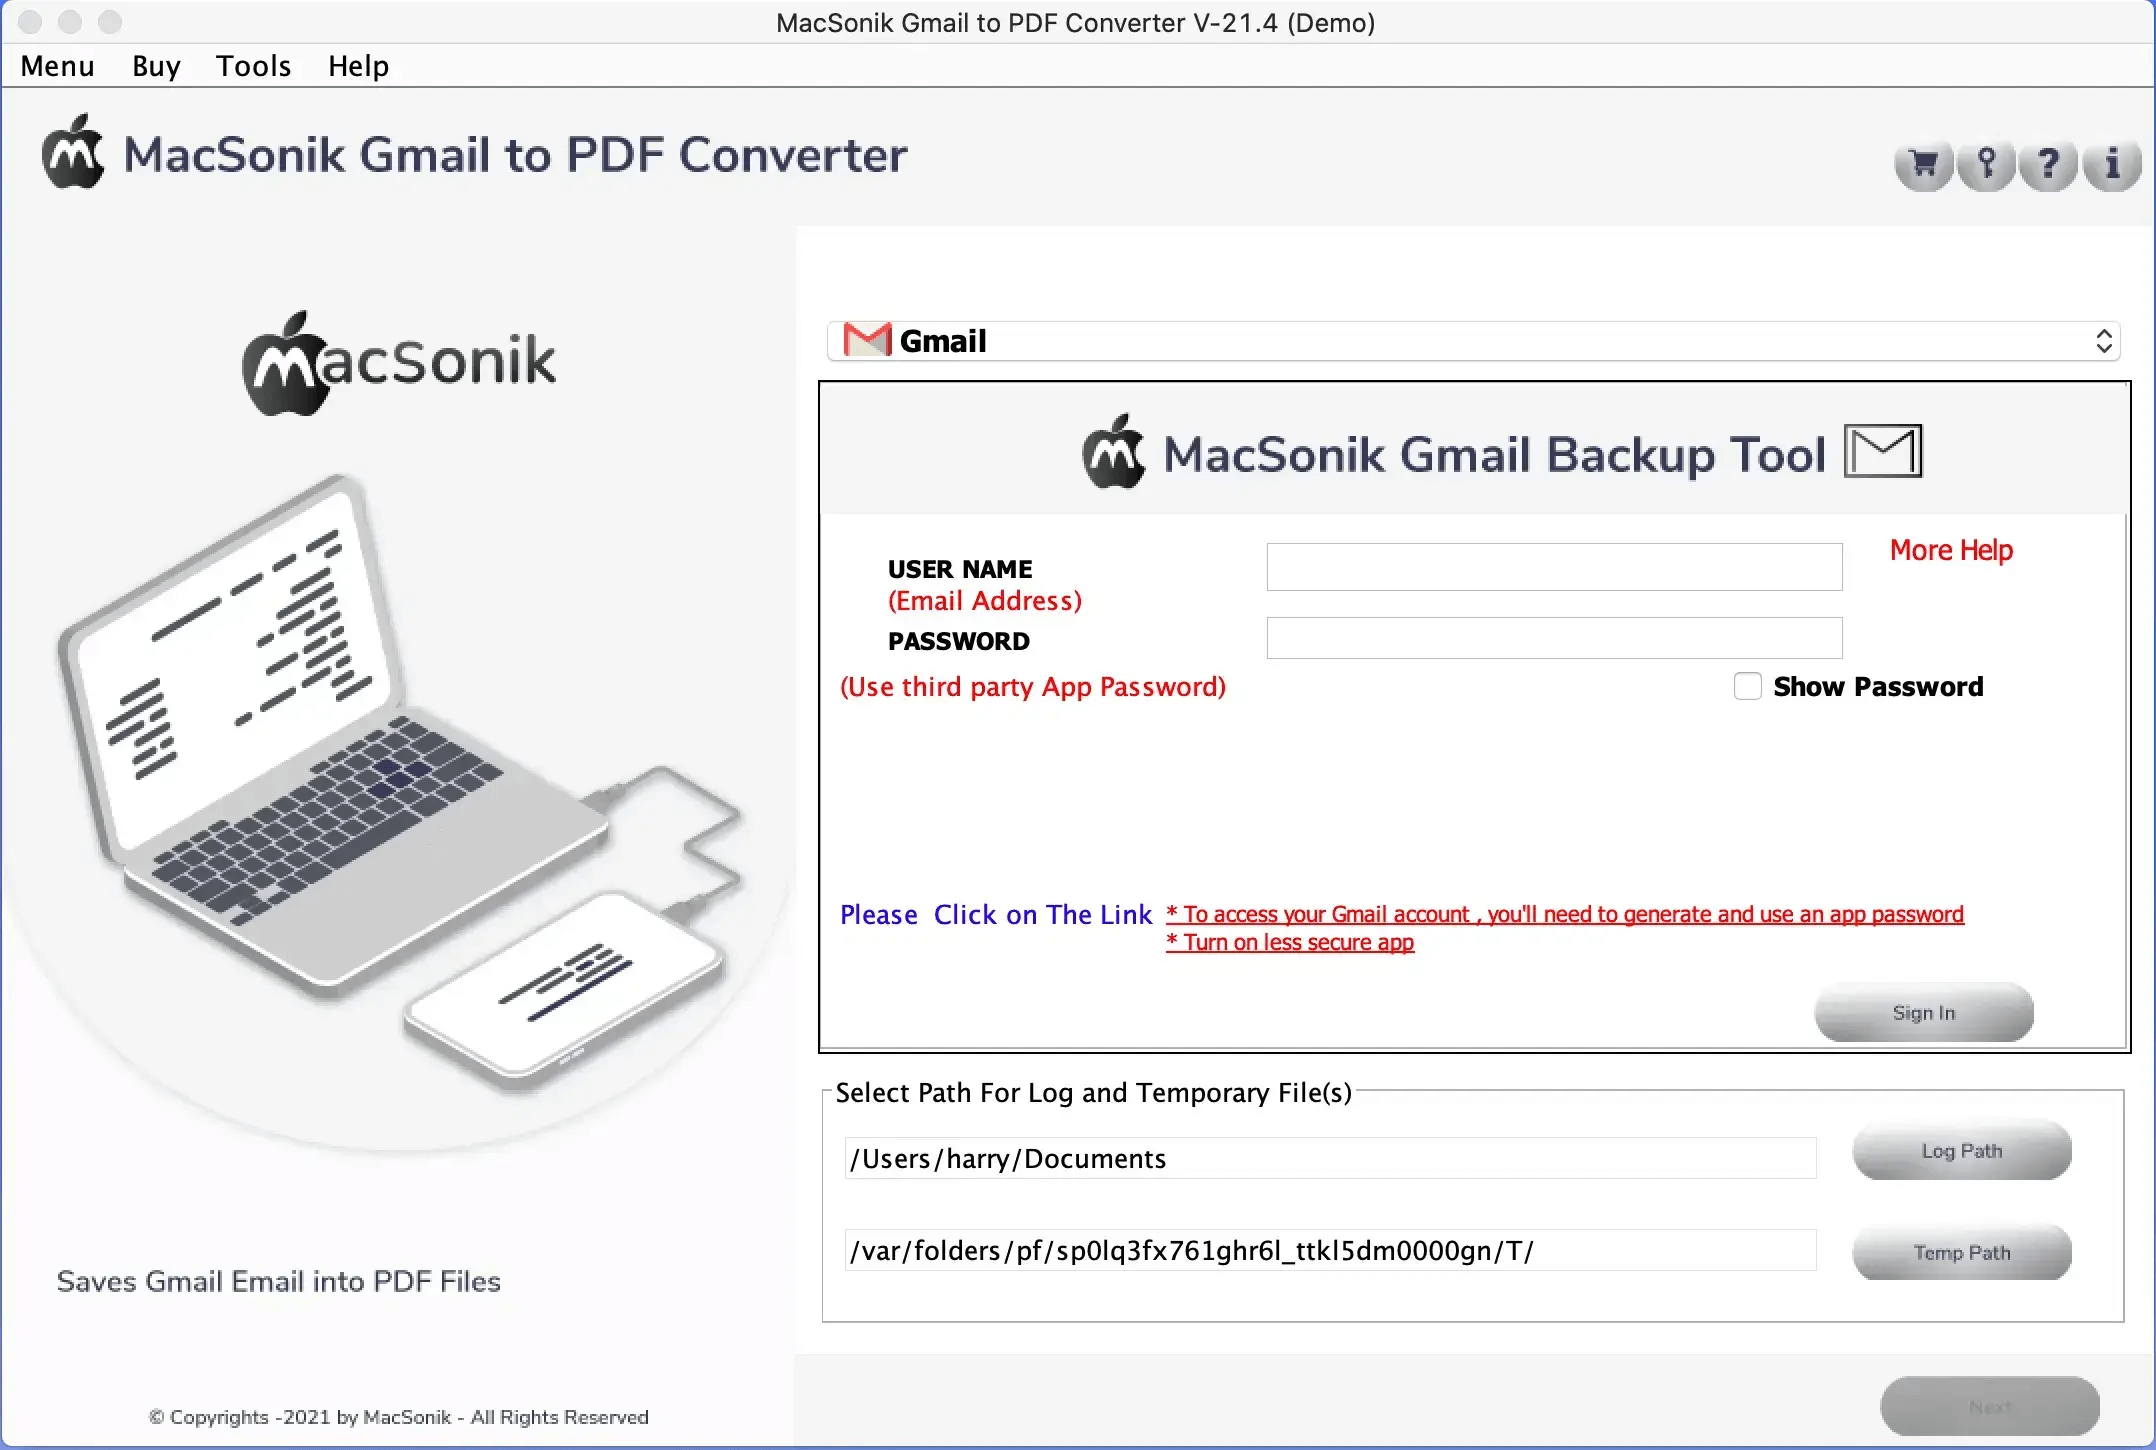 MacSonik Gmail to PDF Converter for Mac 21.4 : Main Window